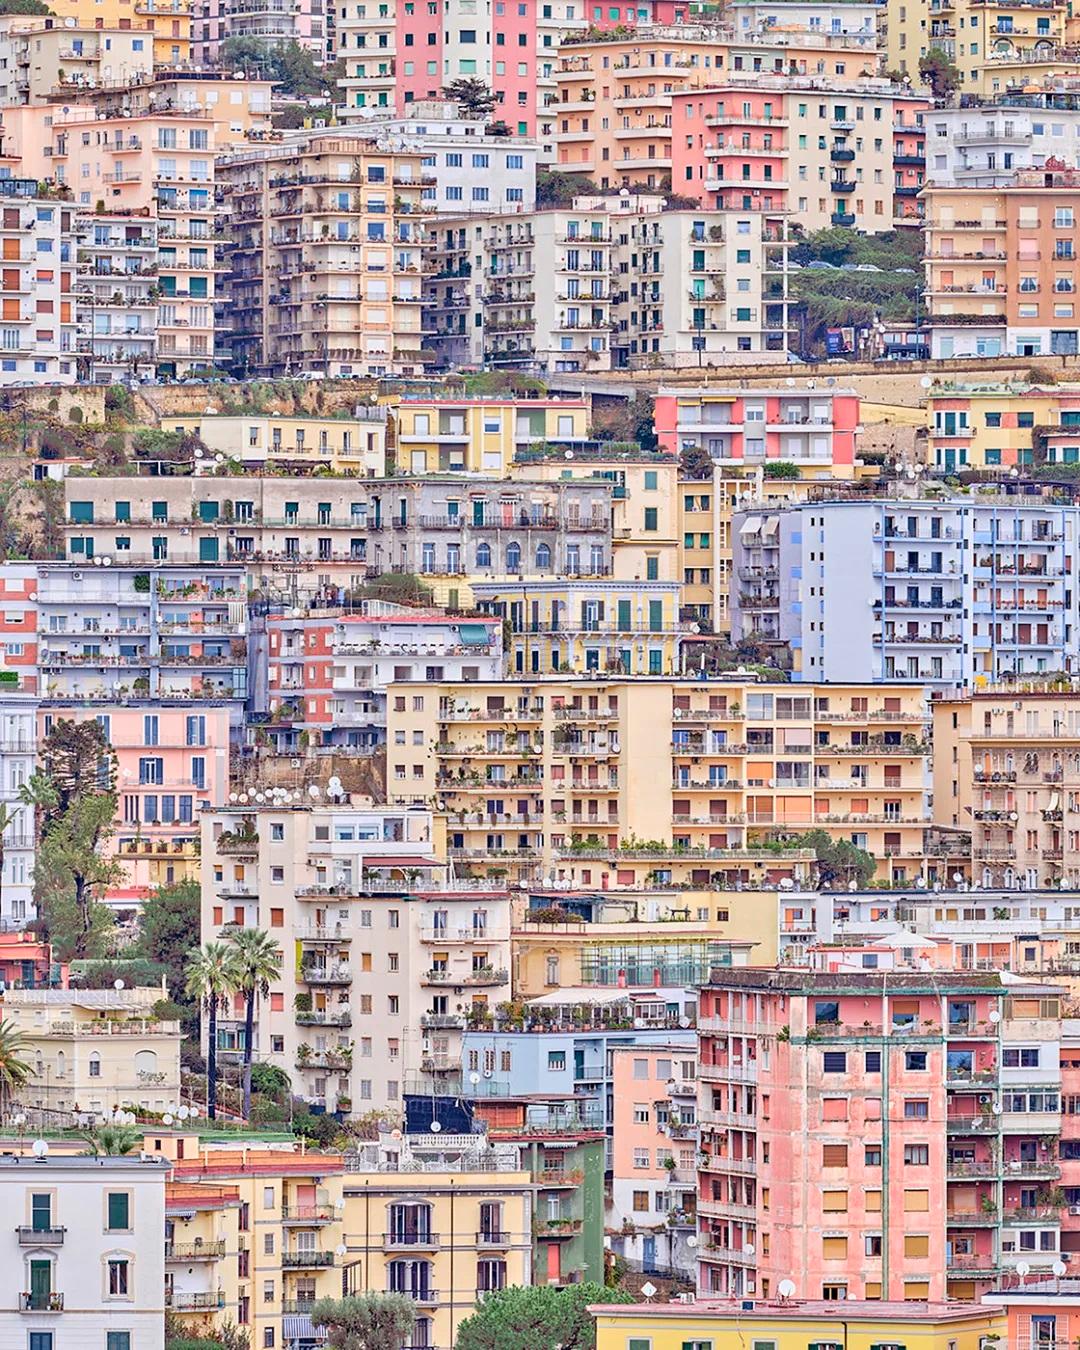 David Burdeny Landscape Photograph - La citta alta II, Naples, Italy